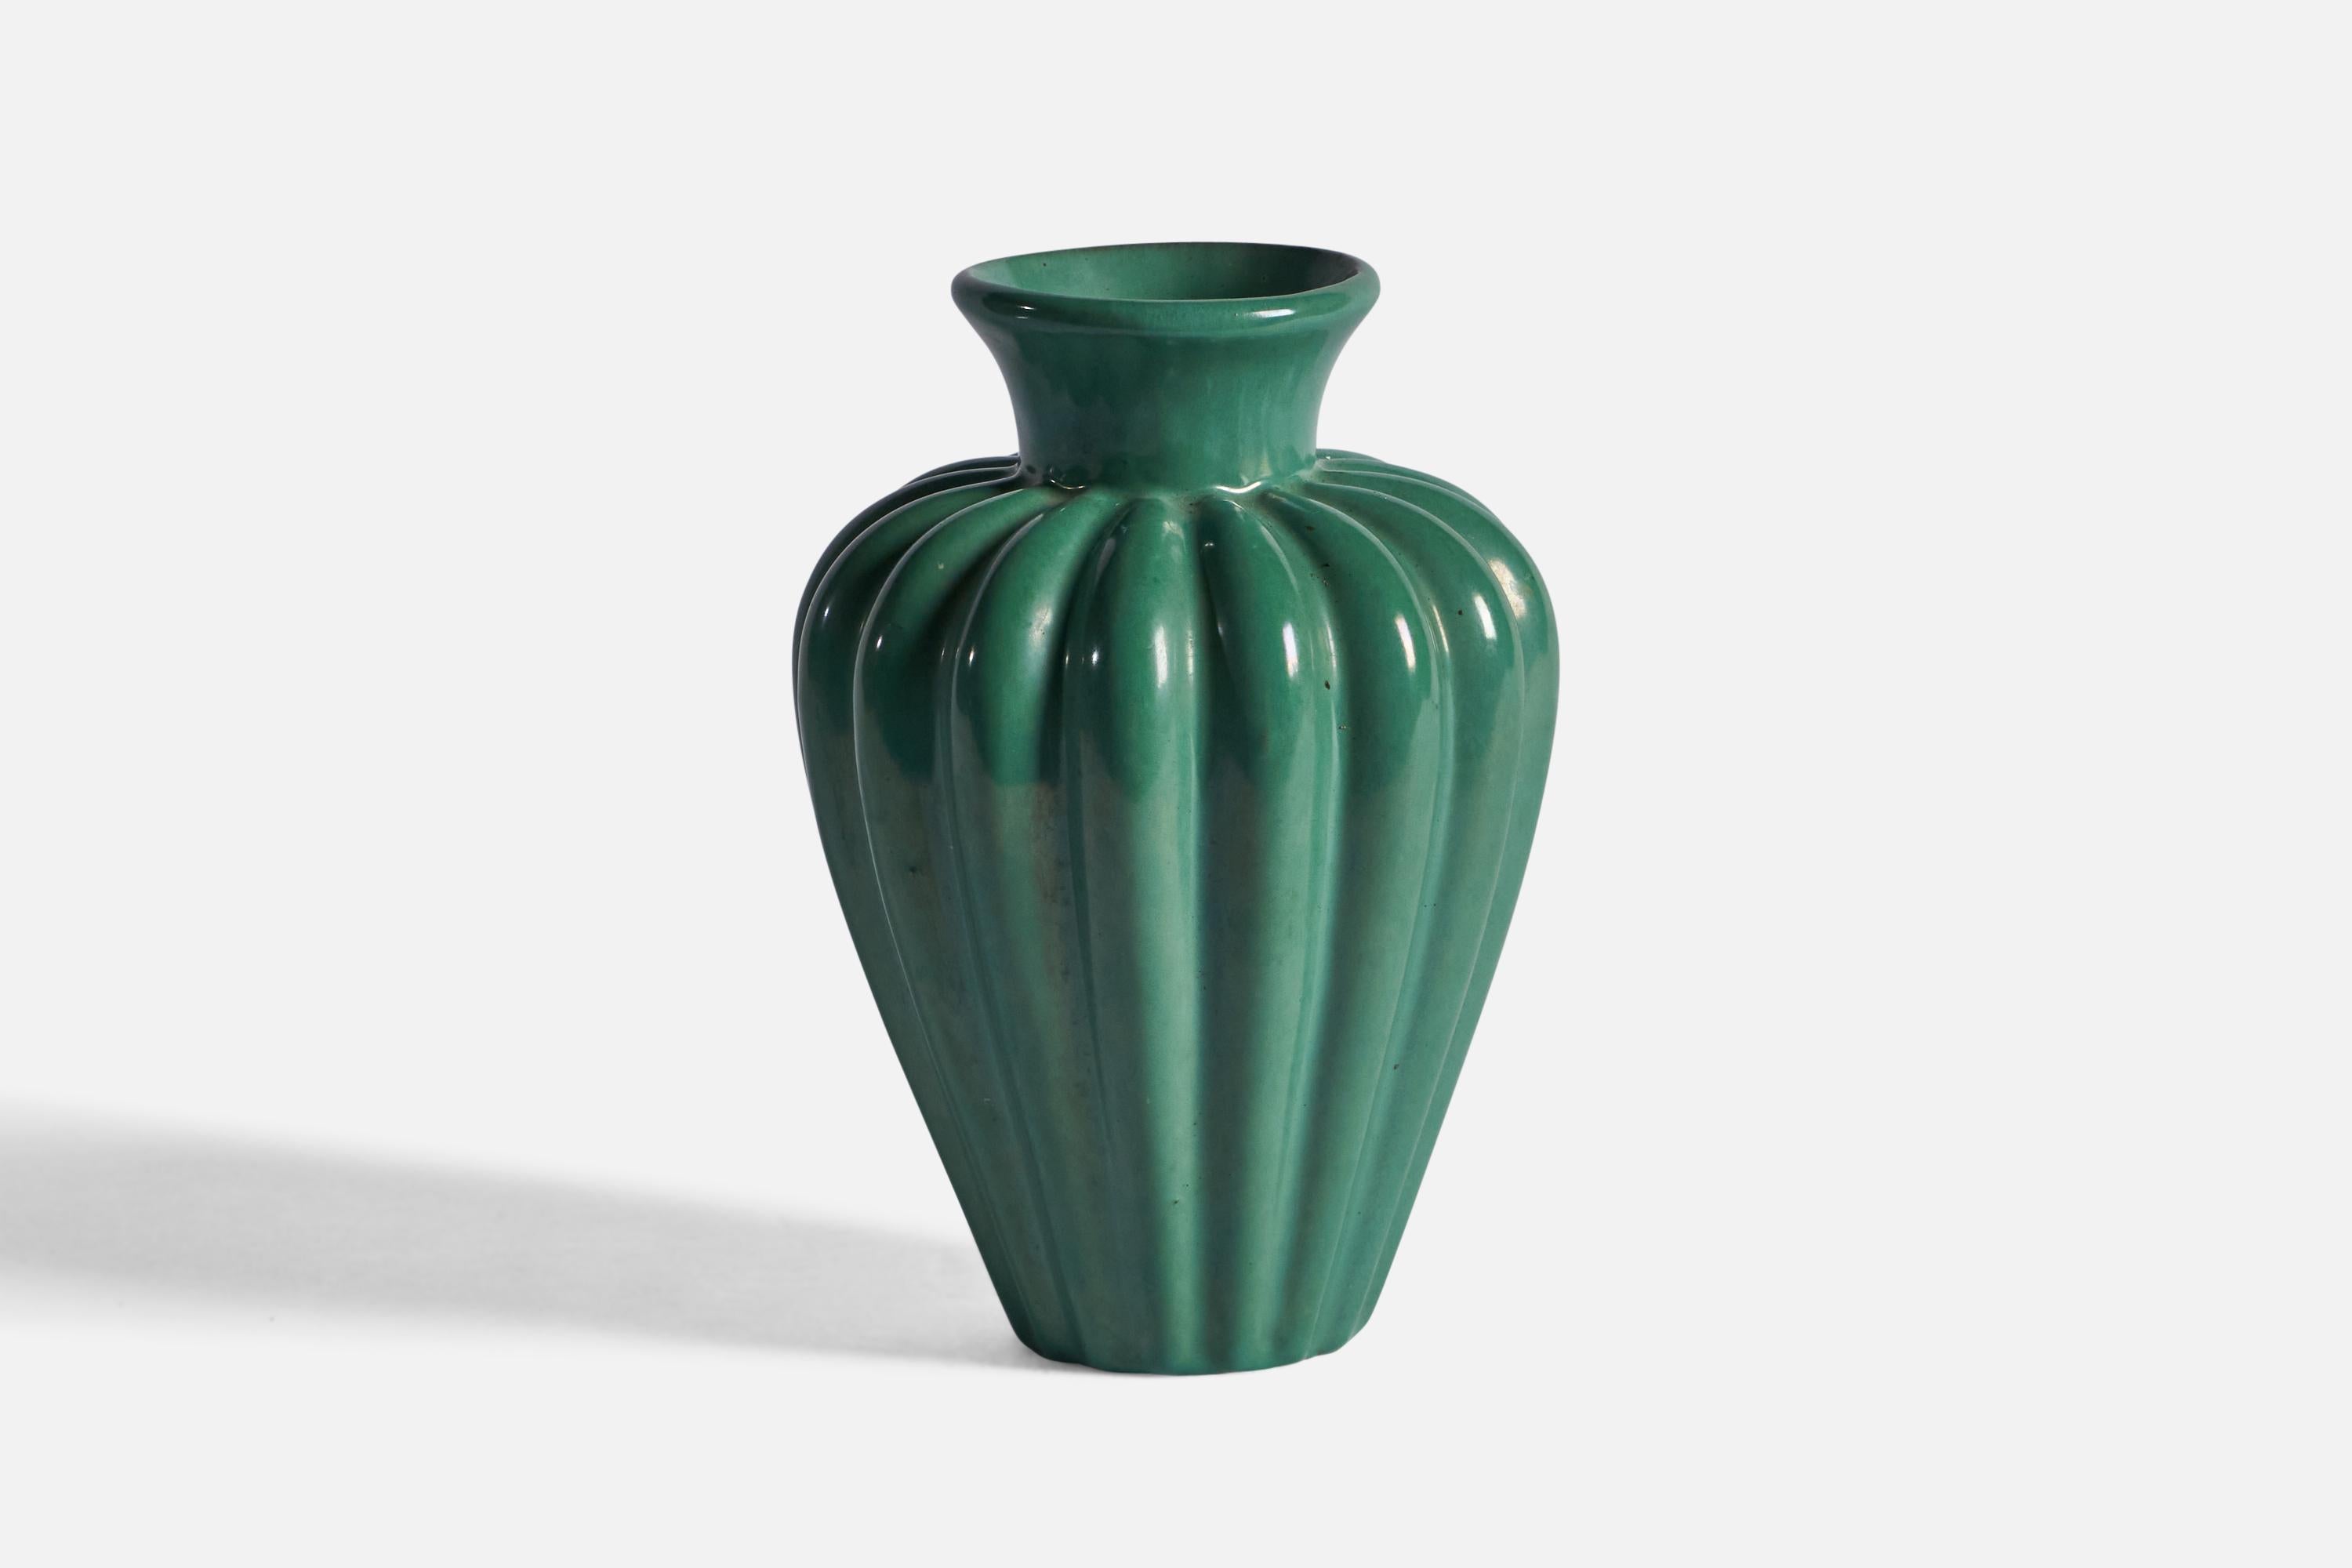 A green-glazed fluted vase designed and produced by Upsala Ekeby, Sweden, c. 1940s.